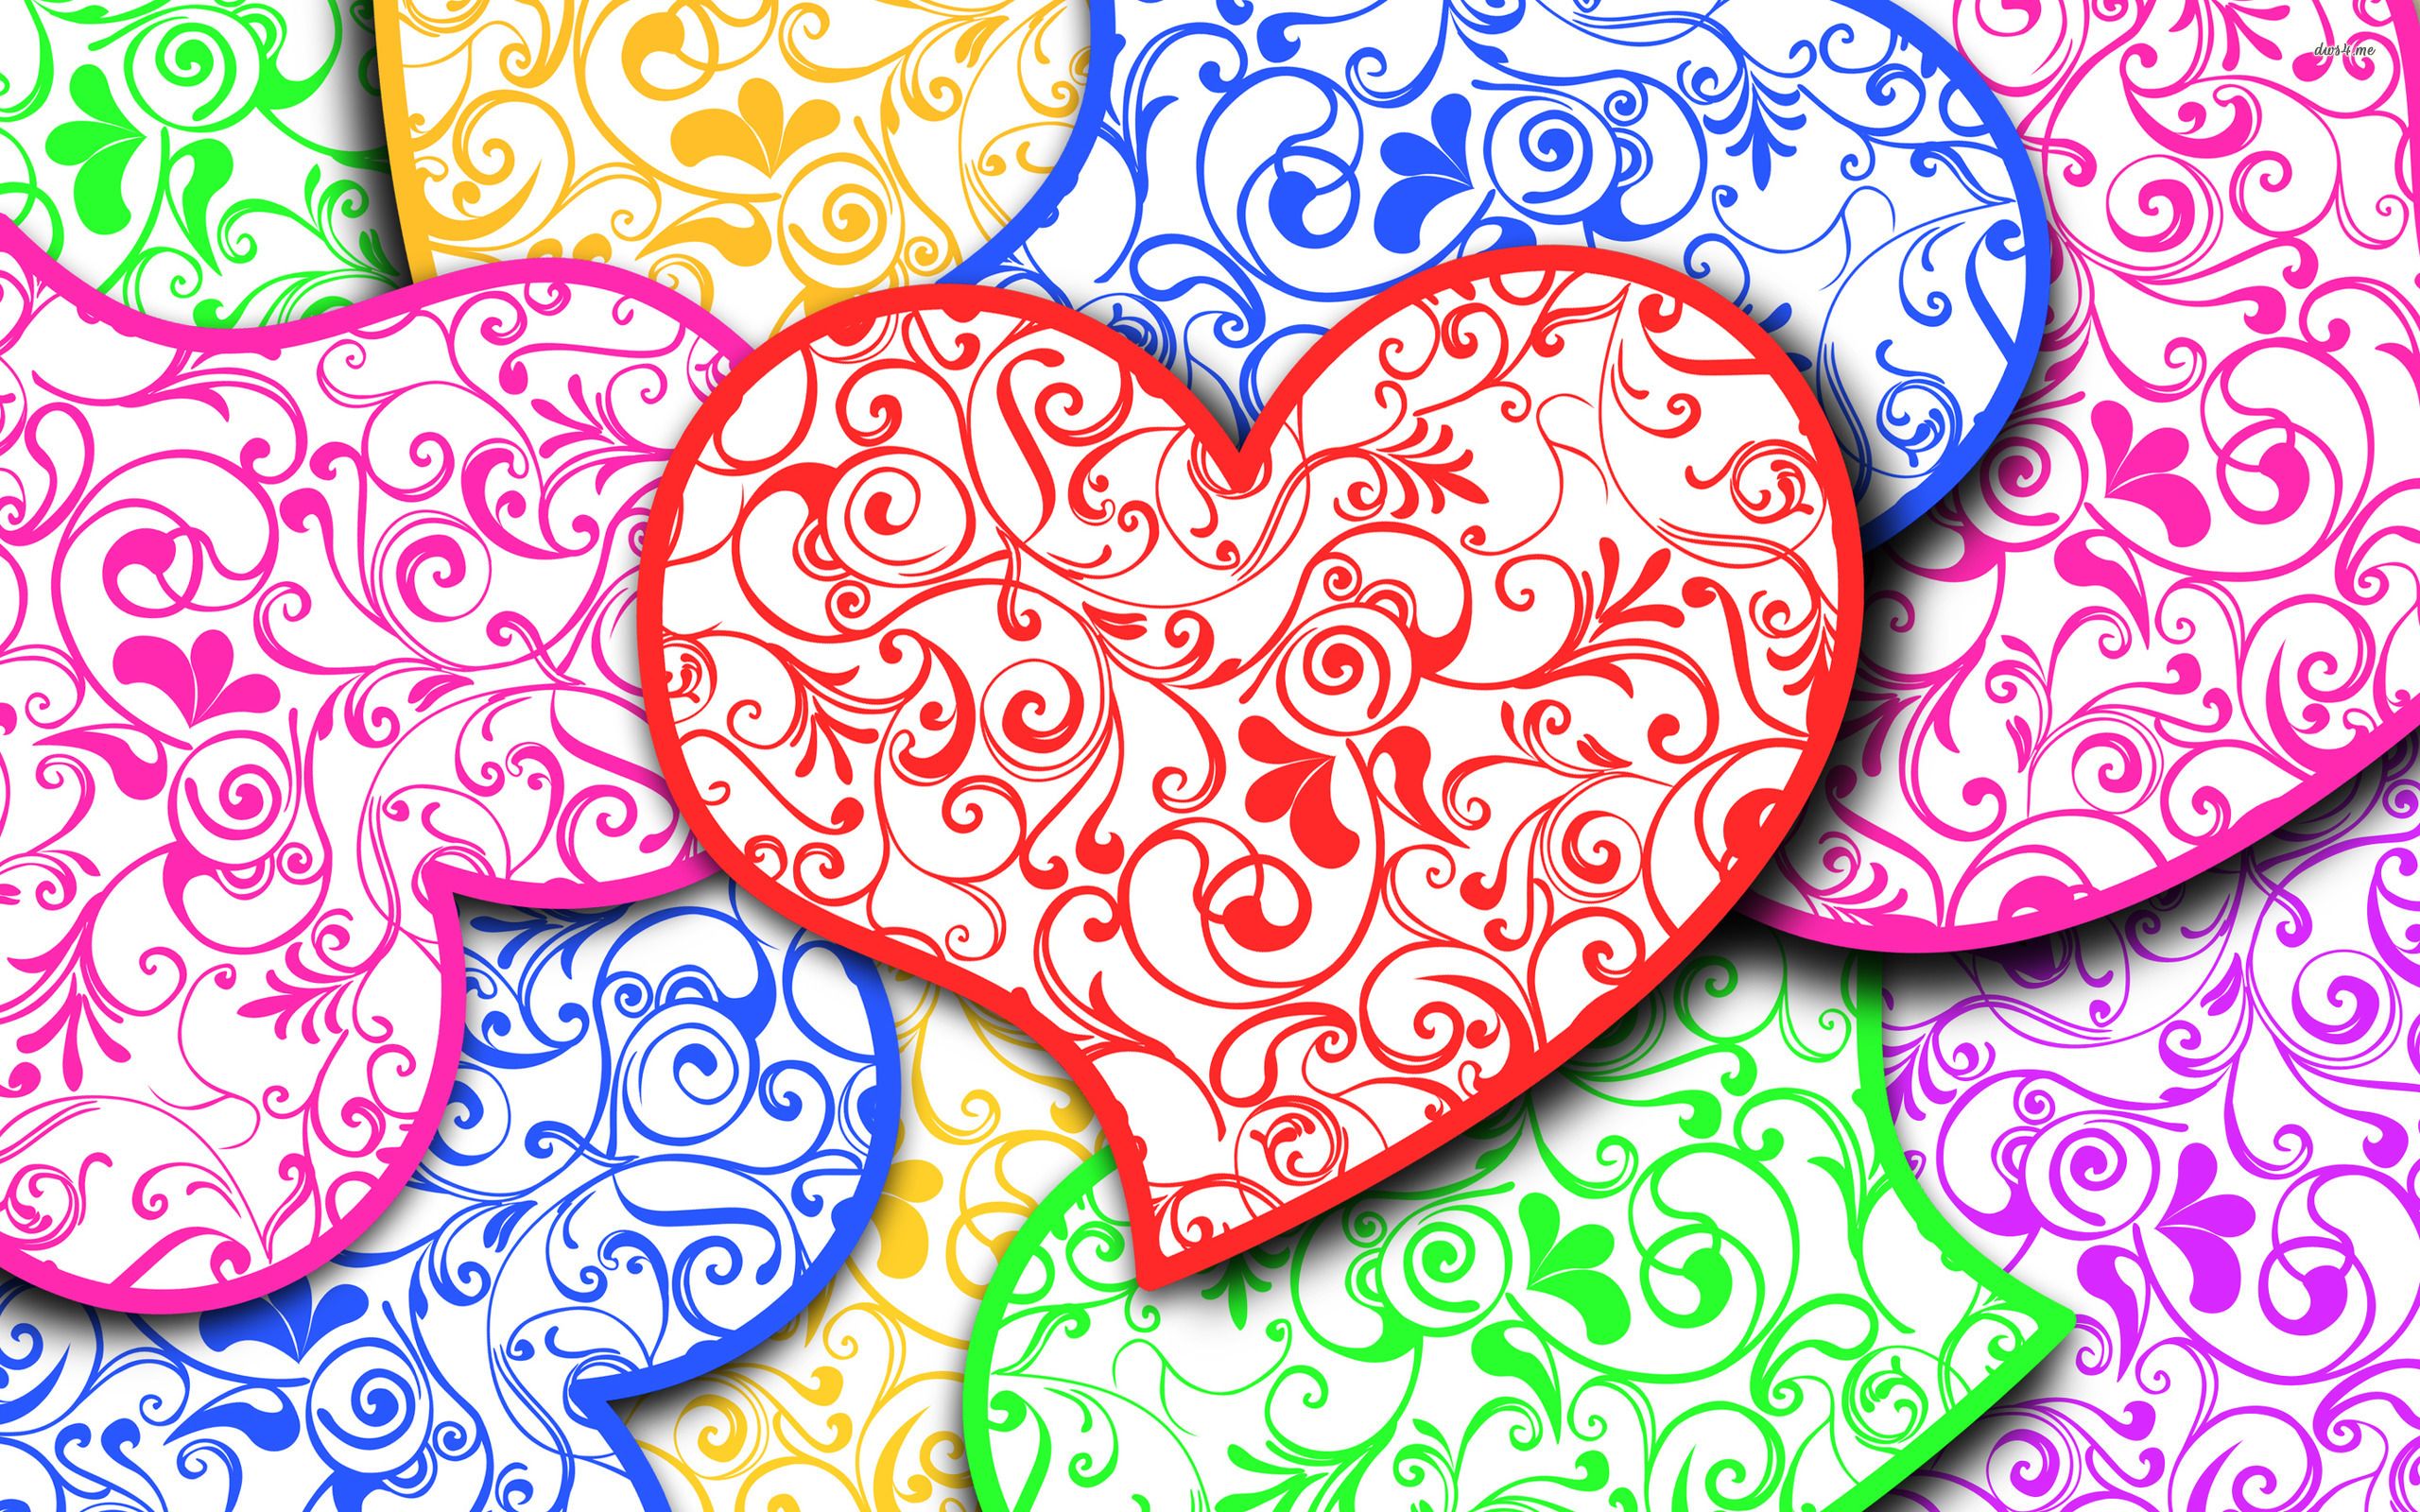 30 Beautiful Love & Heart Wallpapers | Tech-Lovers l Web Design ...